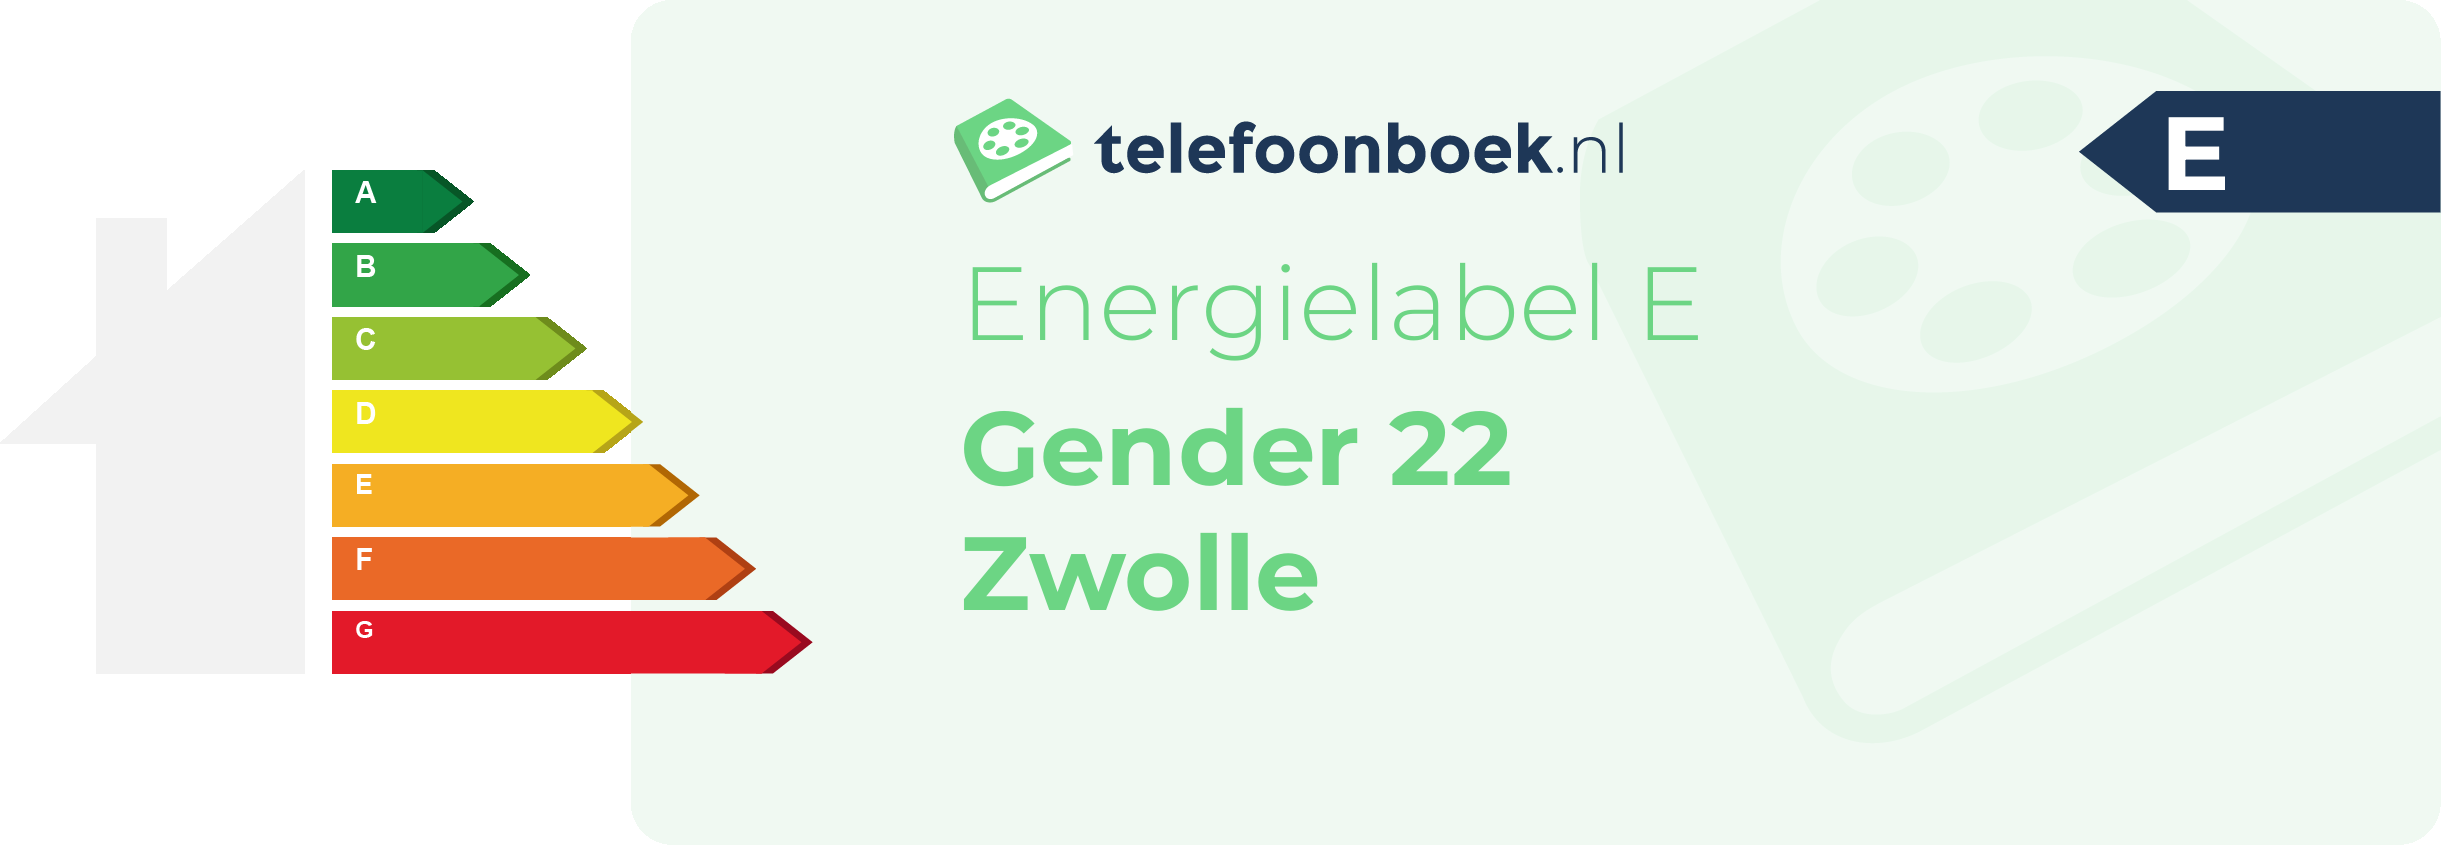 Energielabel Gender 22 Zwolle